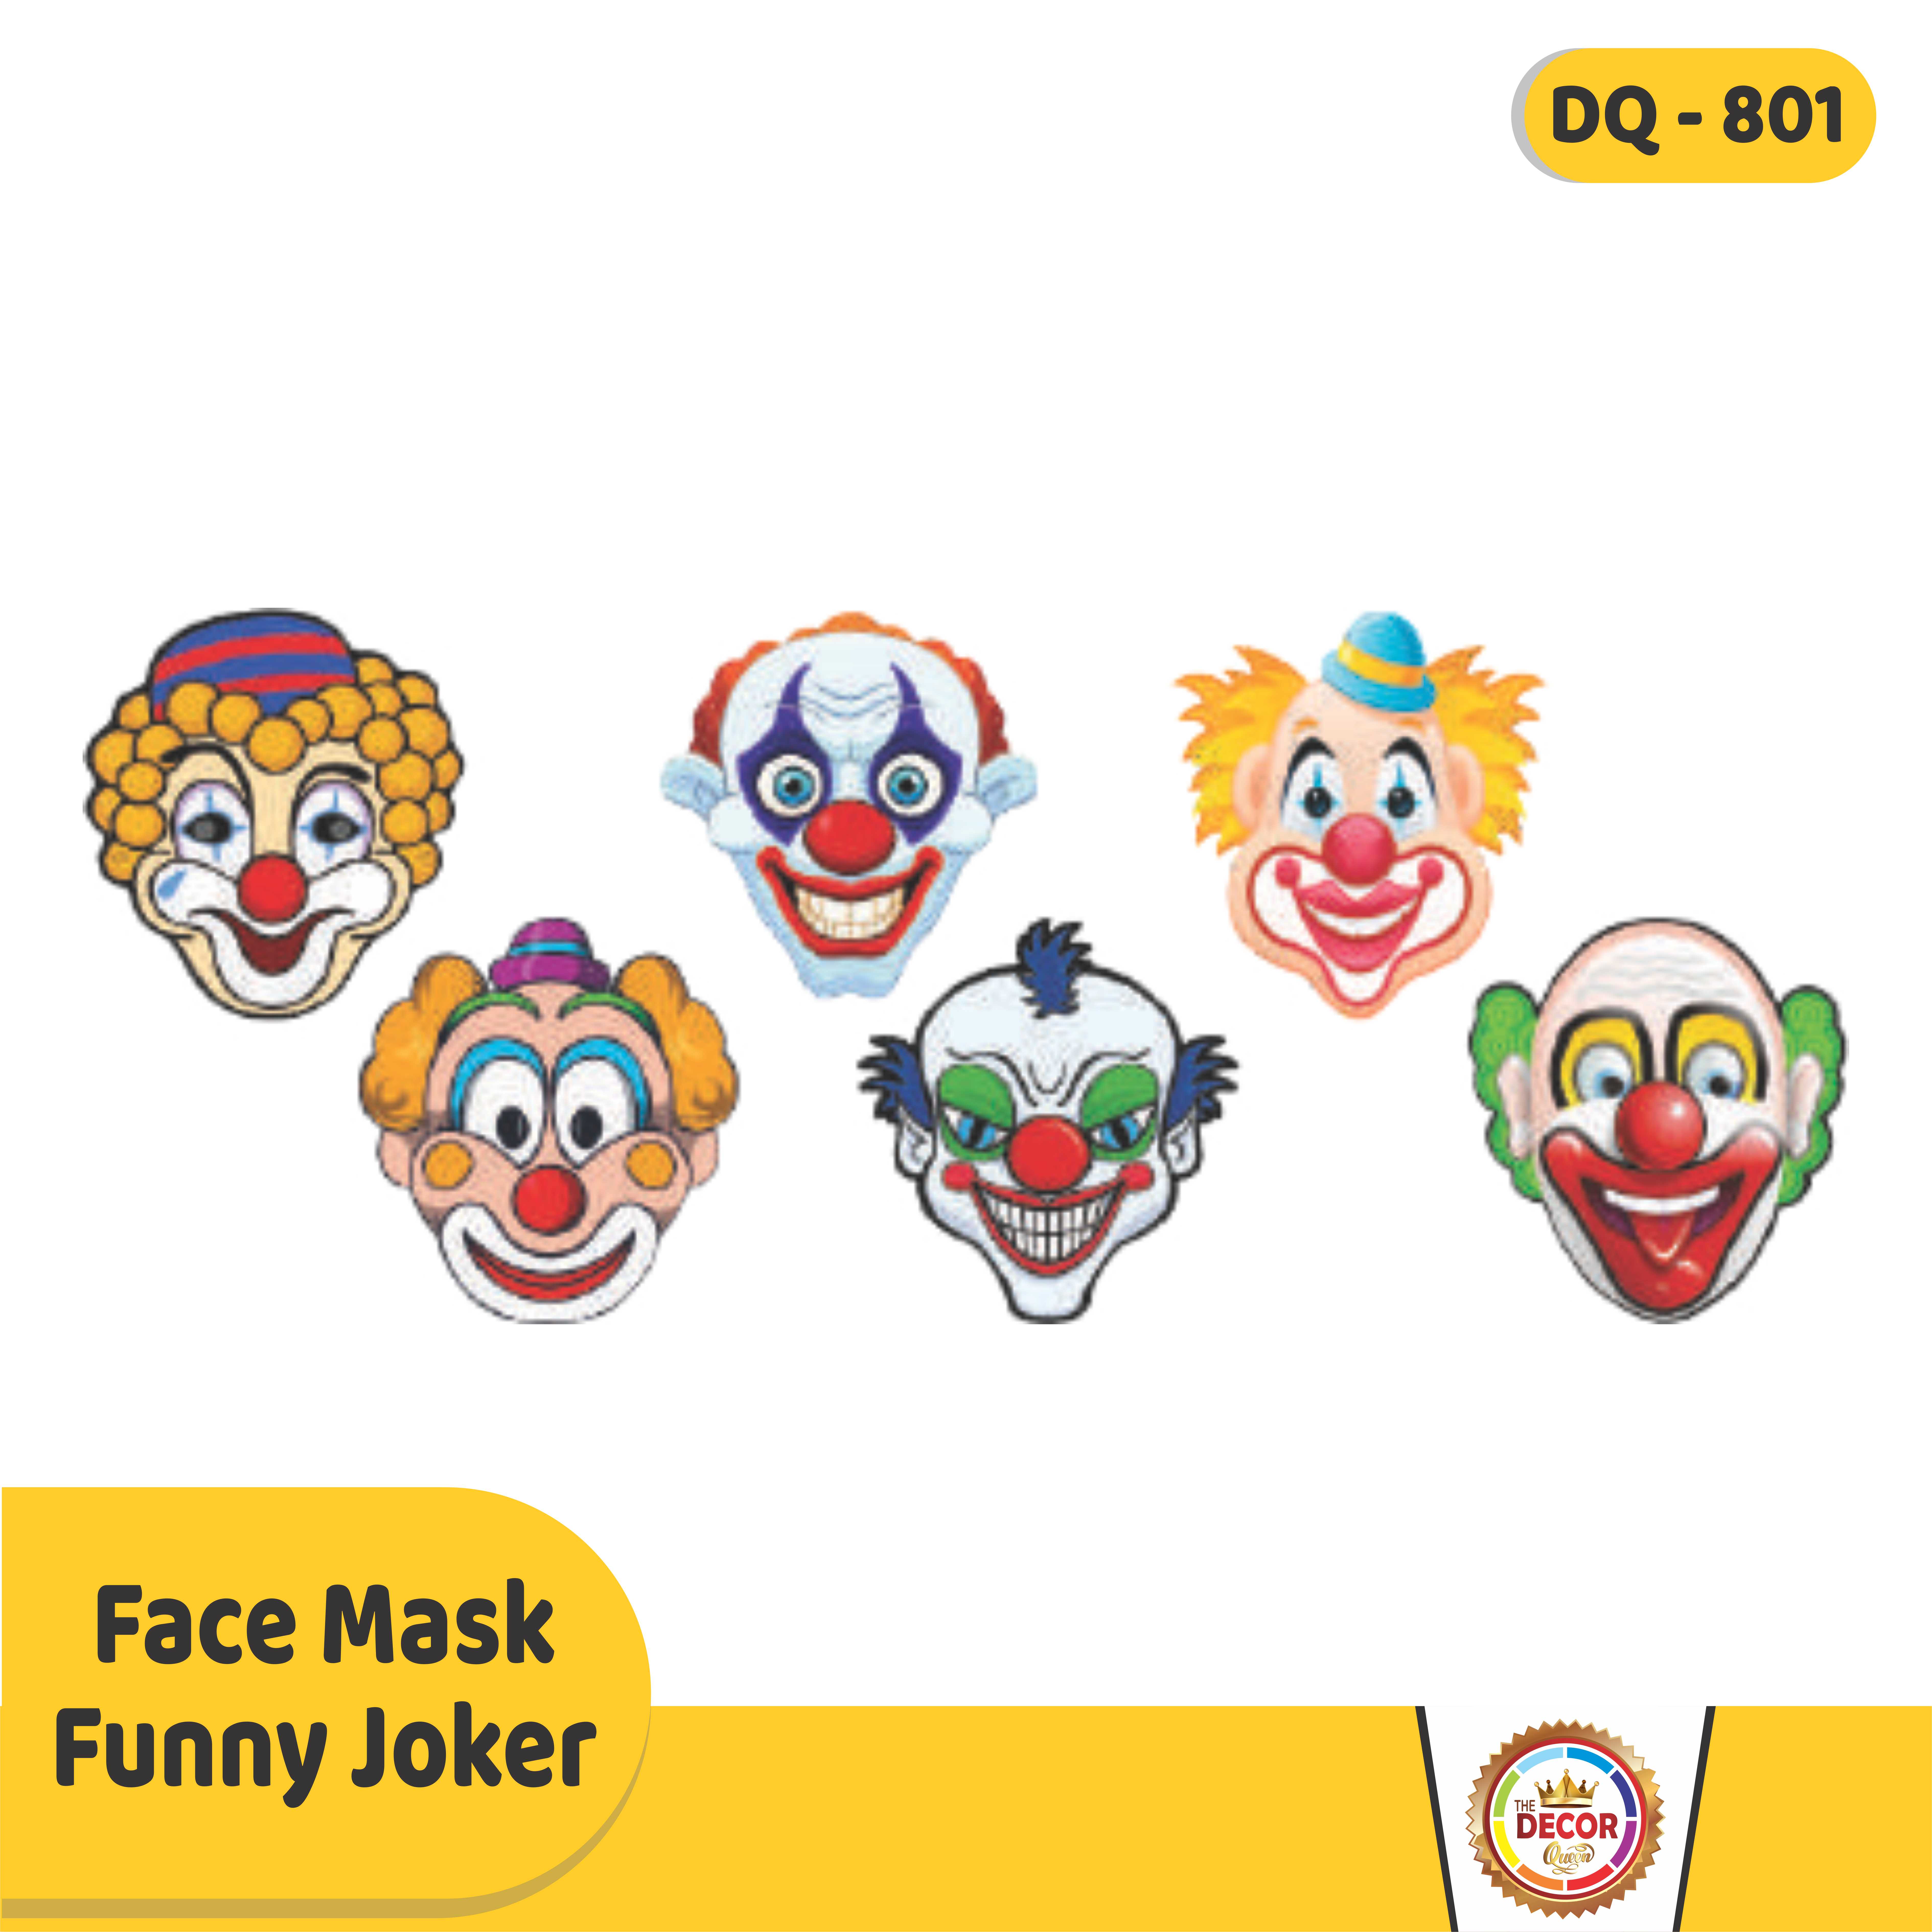 FACE MASK FUNNY JOKER|Mask|Face Mask